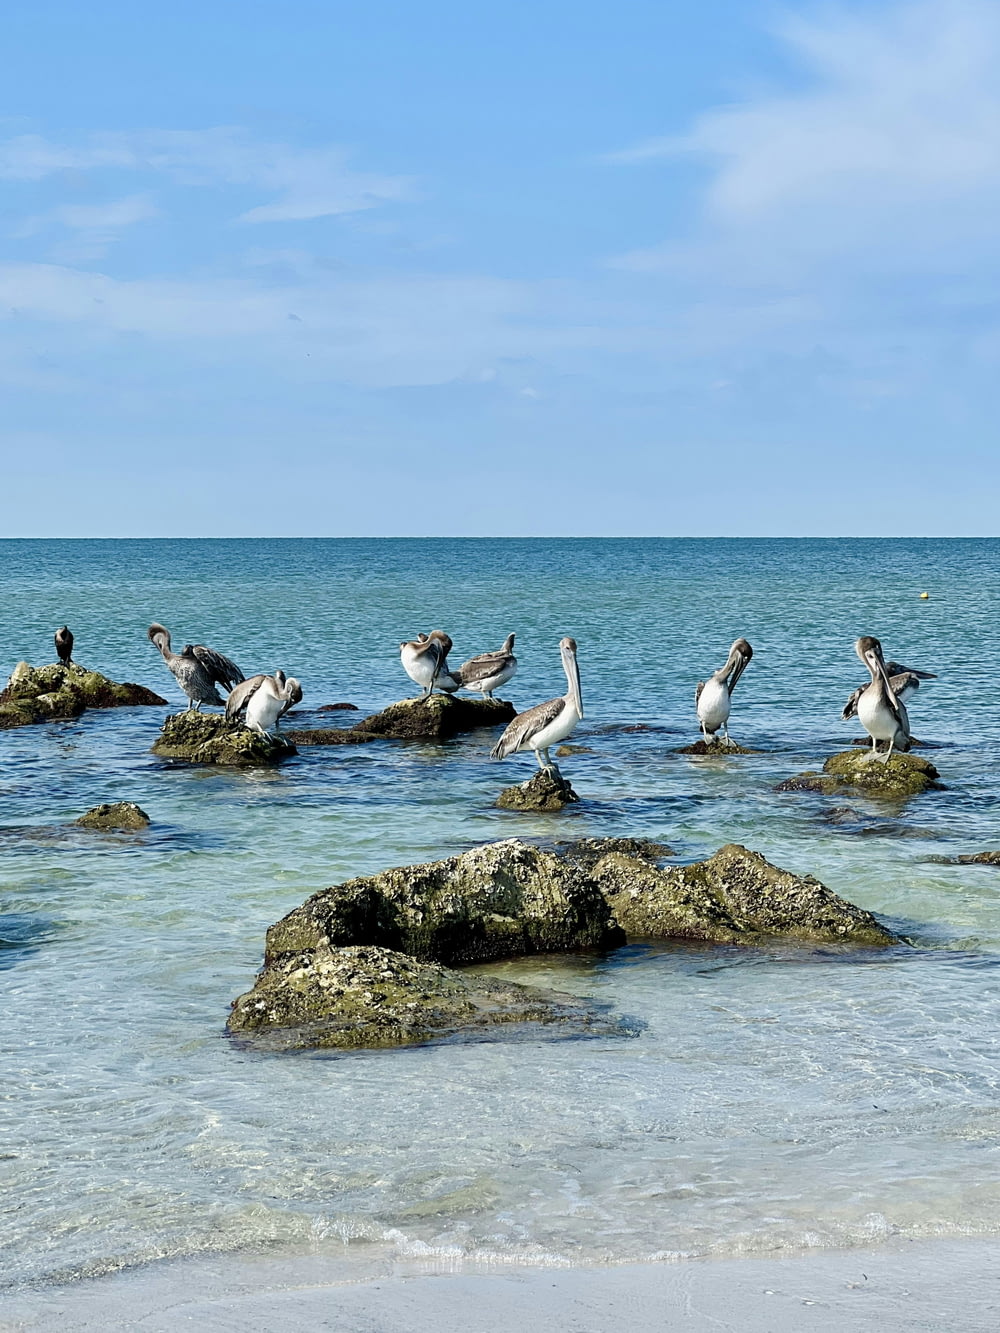 a flock of birds sitting on top of rocks in the ocean